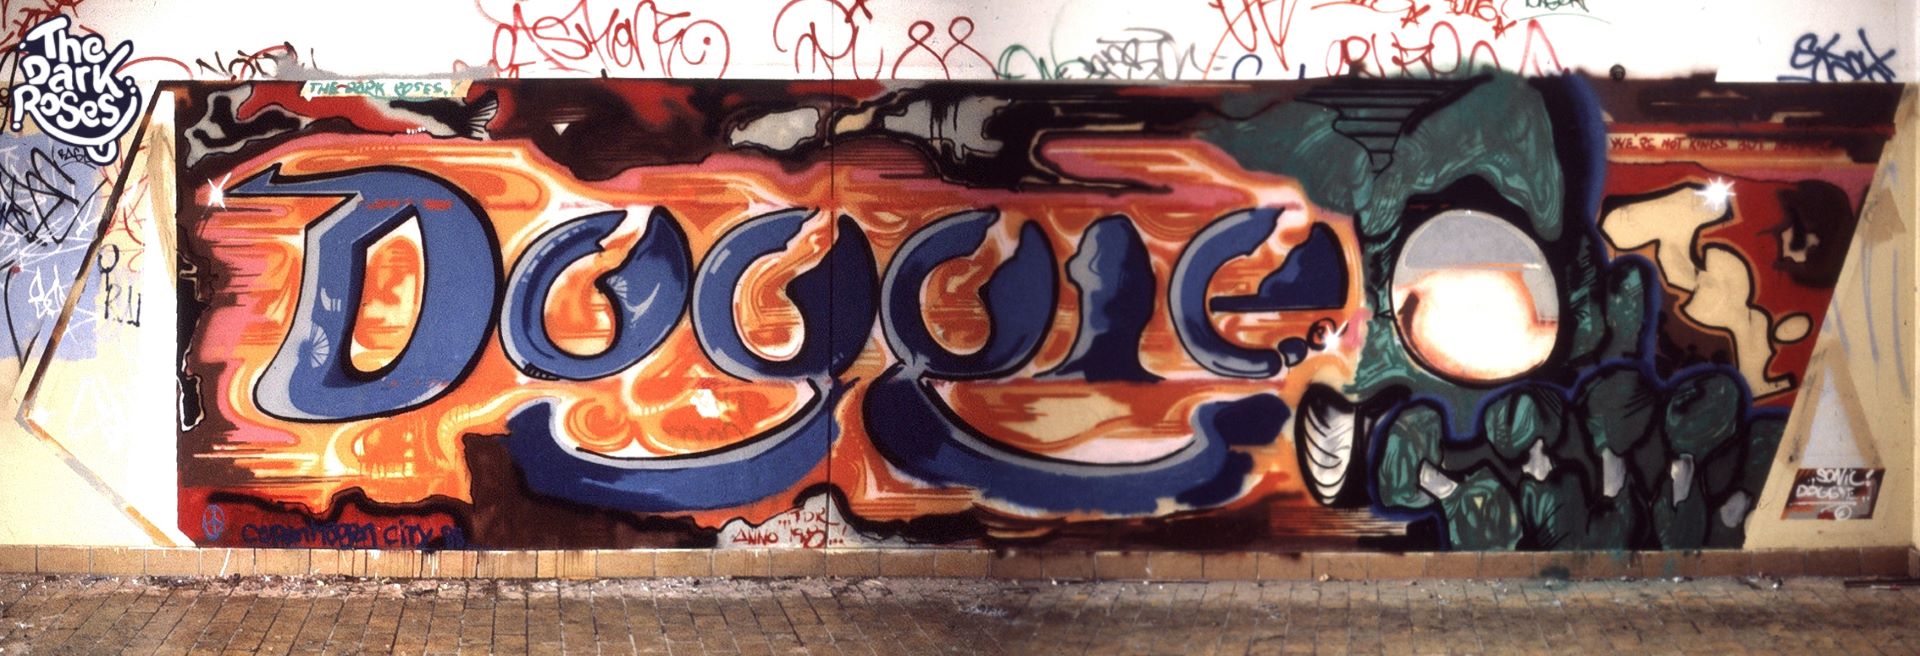 ★ DOGGiE ★ by DoggieDoe and Sonic (Dj Typhoon) - The Dark Roses - Glostrup, Denmark 1988